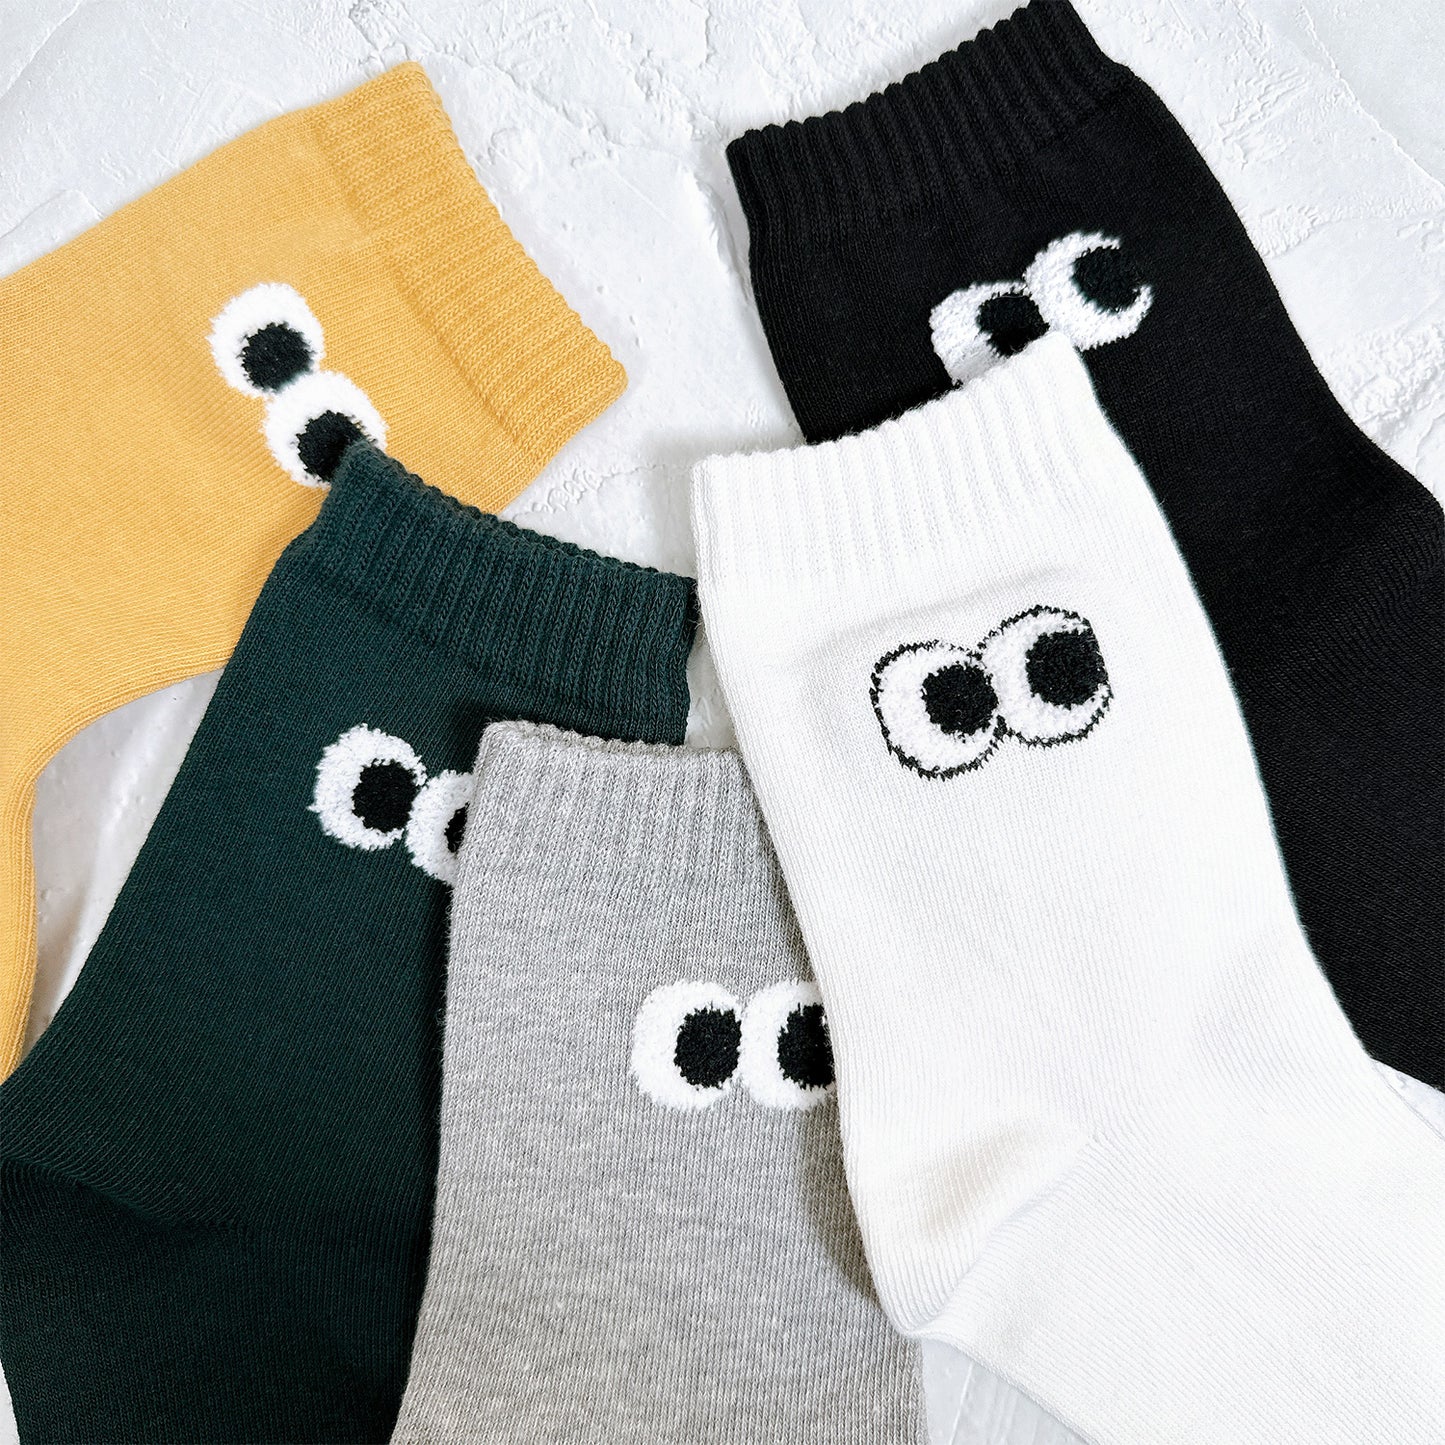 Women's Crew Daily Circle Eyes Socks - Made in Korea